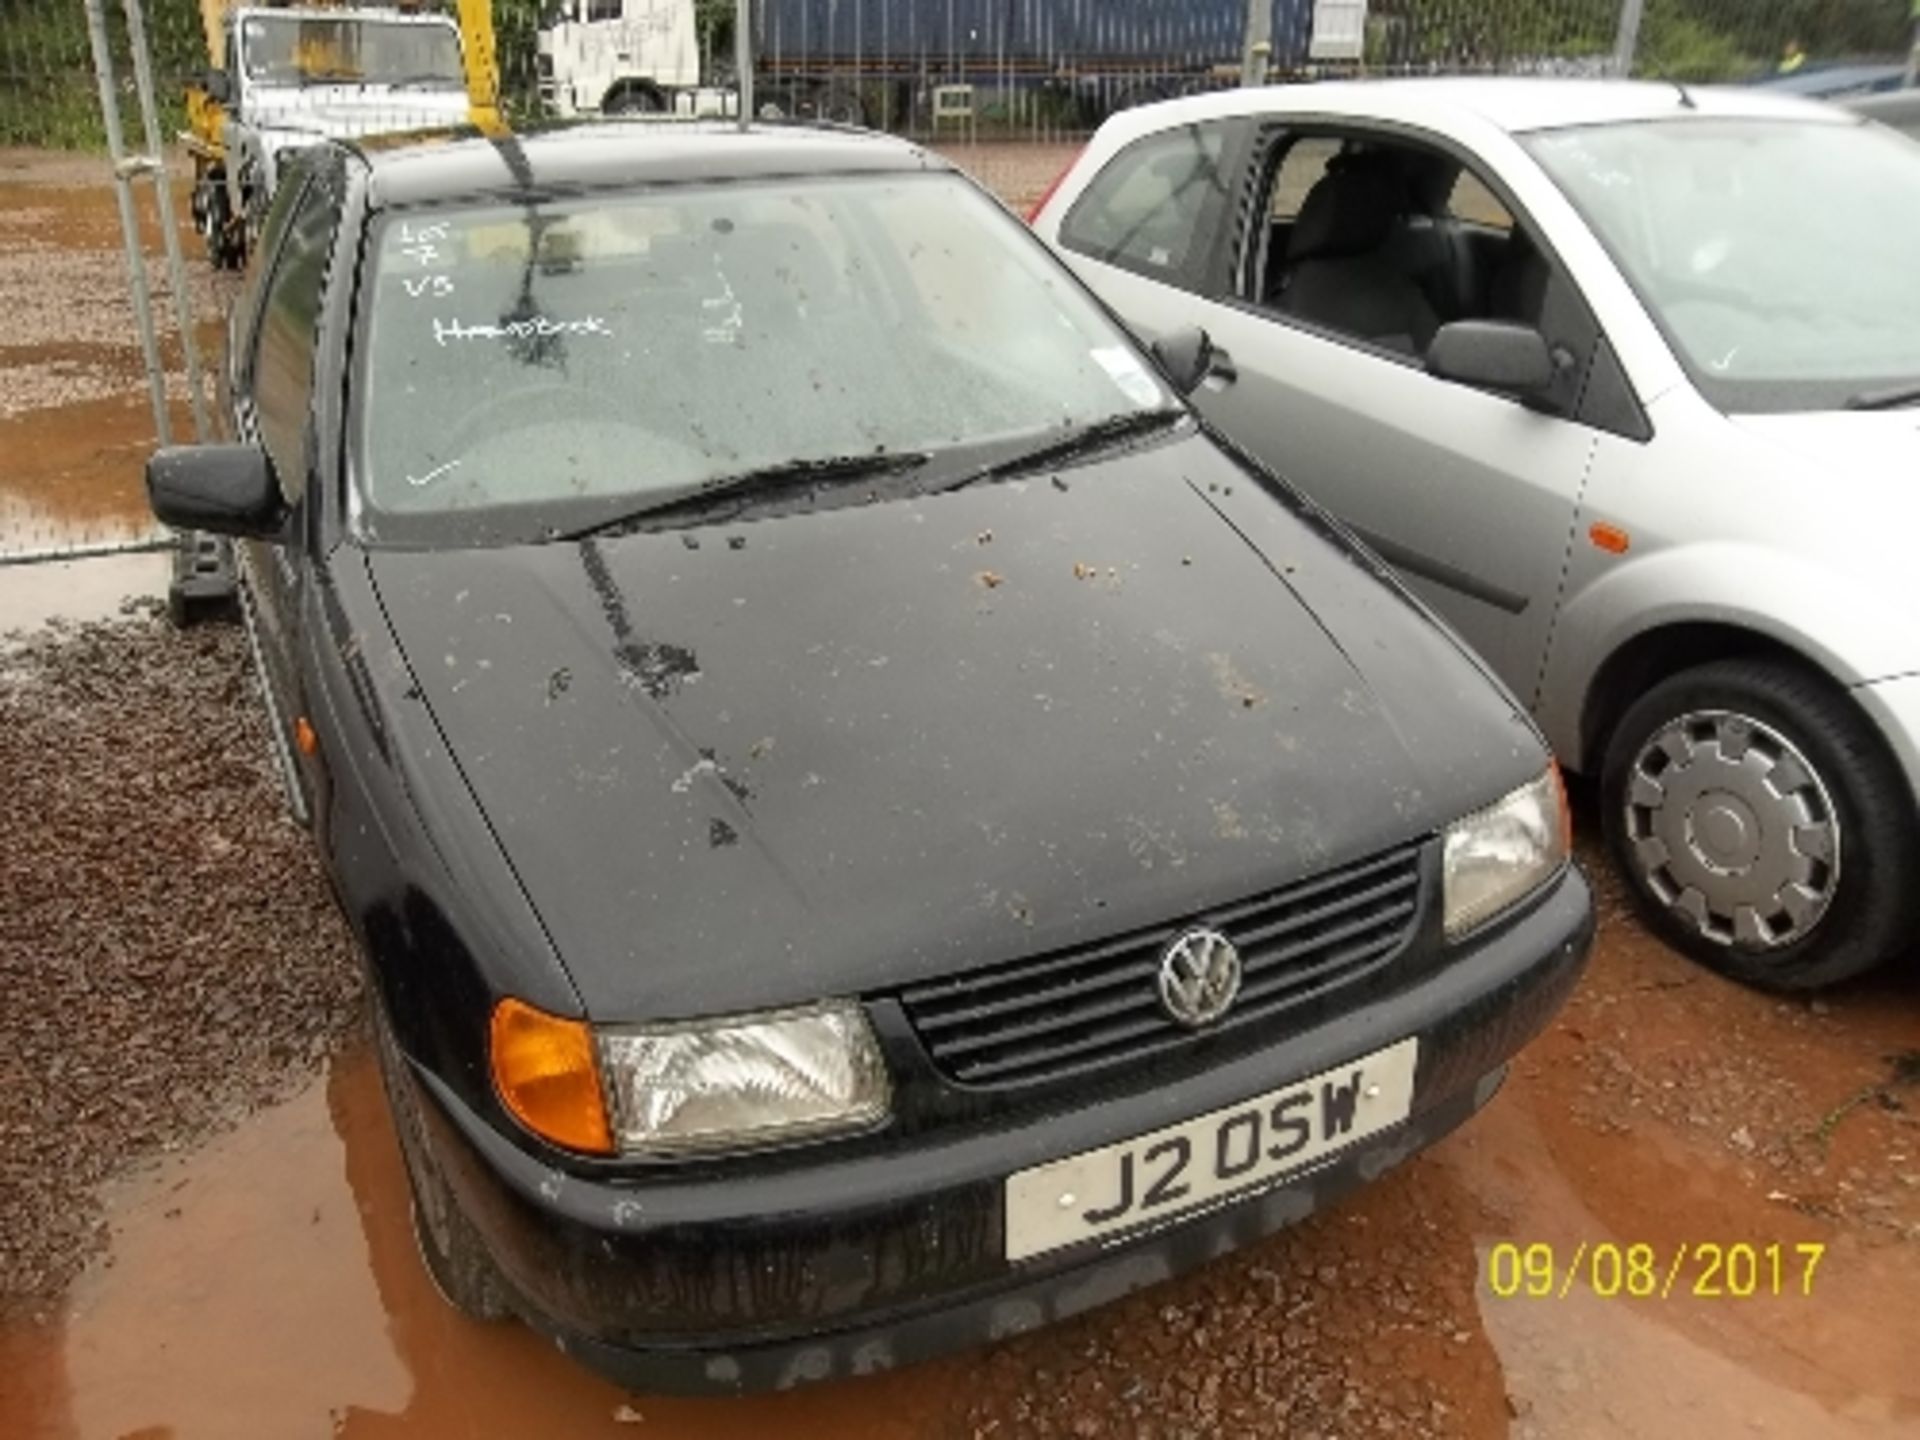 Volkswagen Polo 1.4 CL - J2 OSW Date of registration: 16.08.1996 1390cc, petrol, manual, black